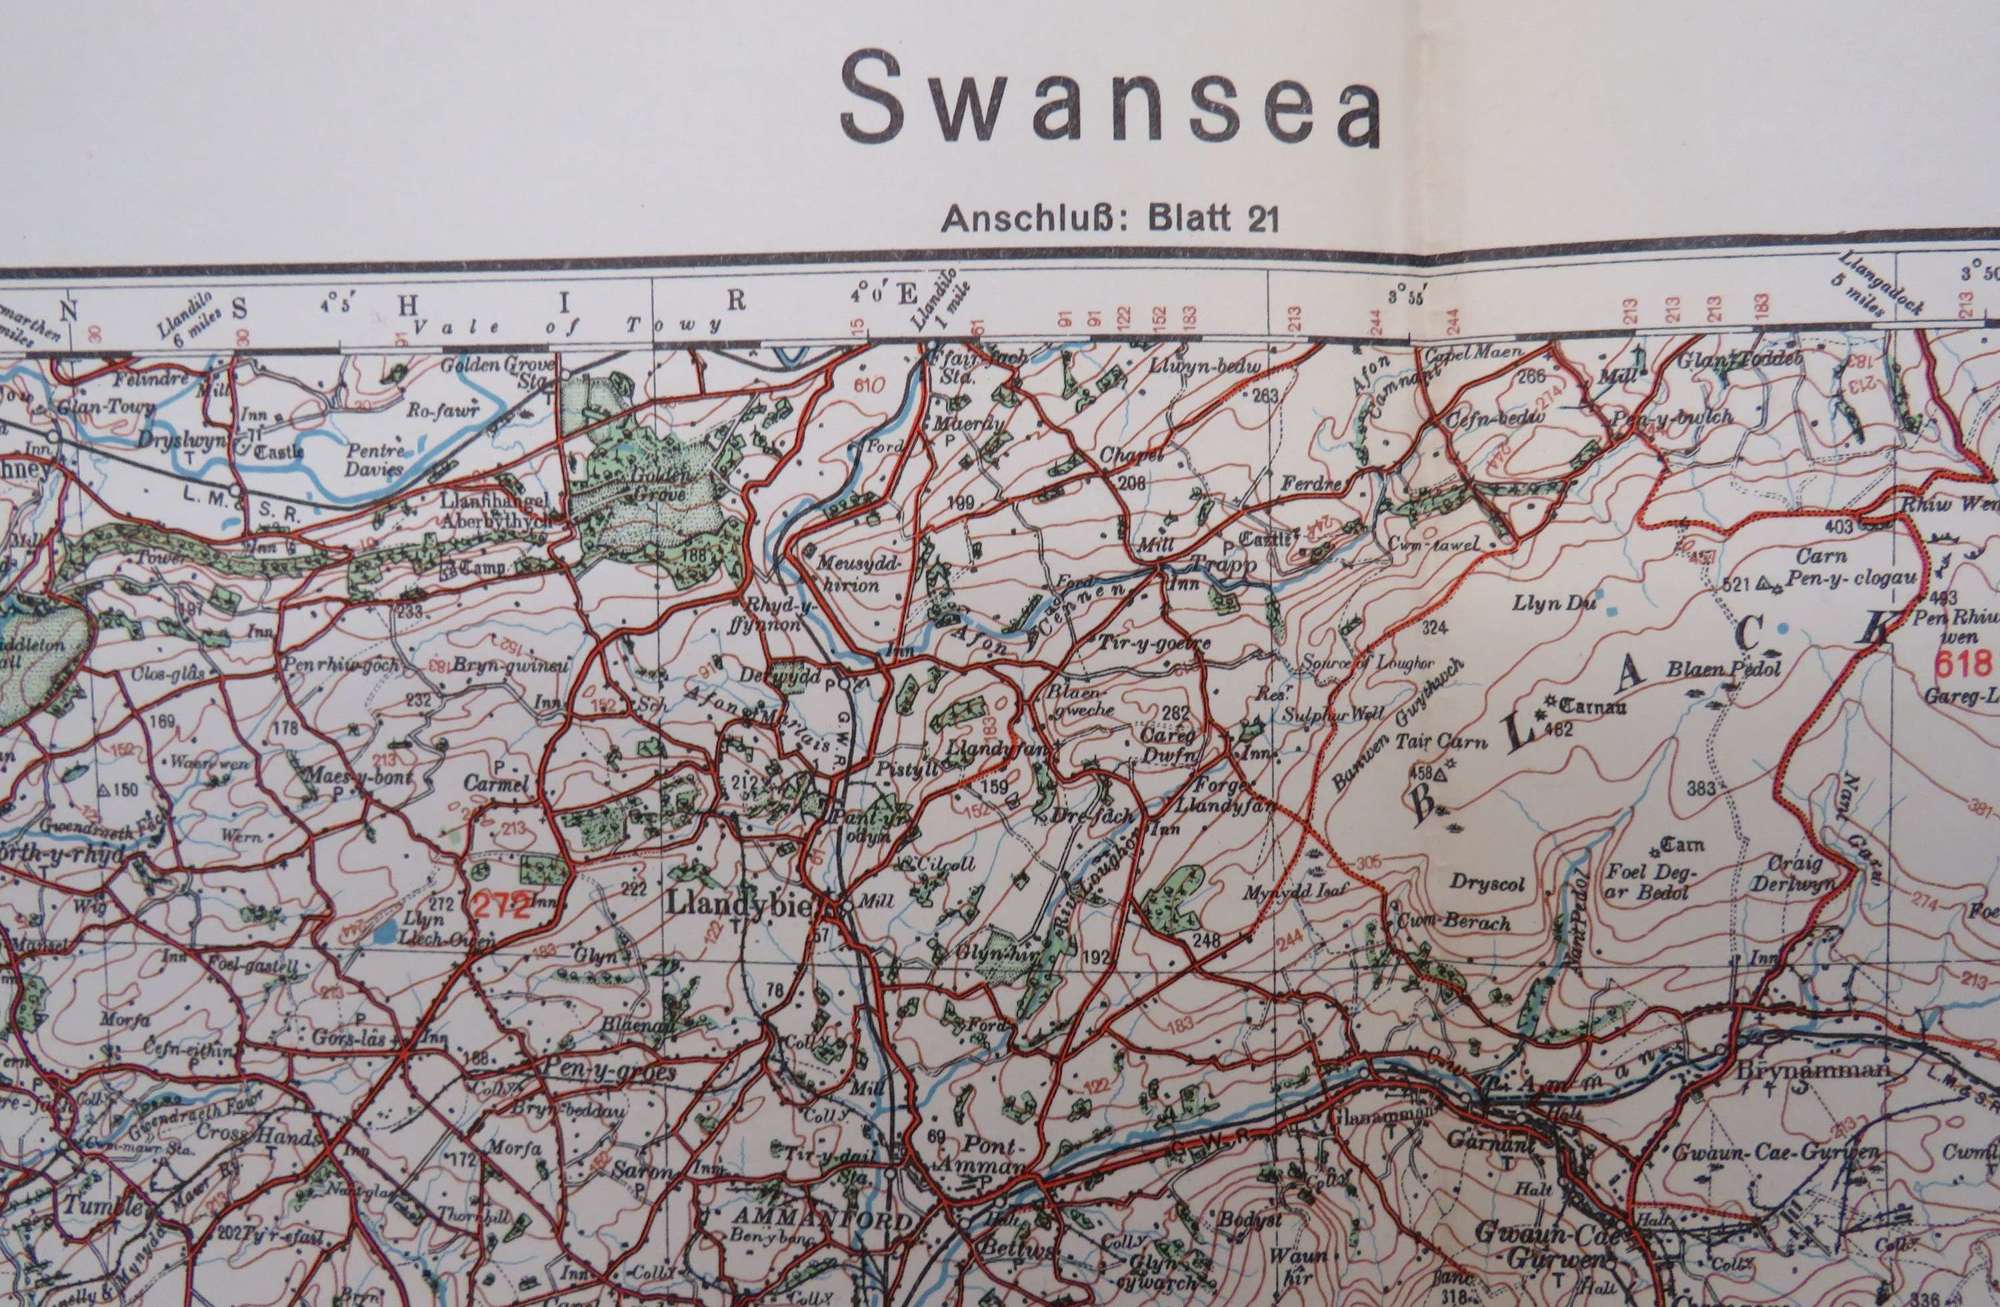 WW 2 German Invasion Map of Swansea